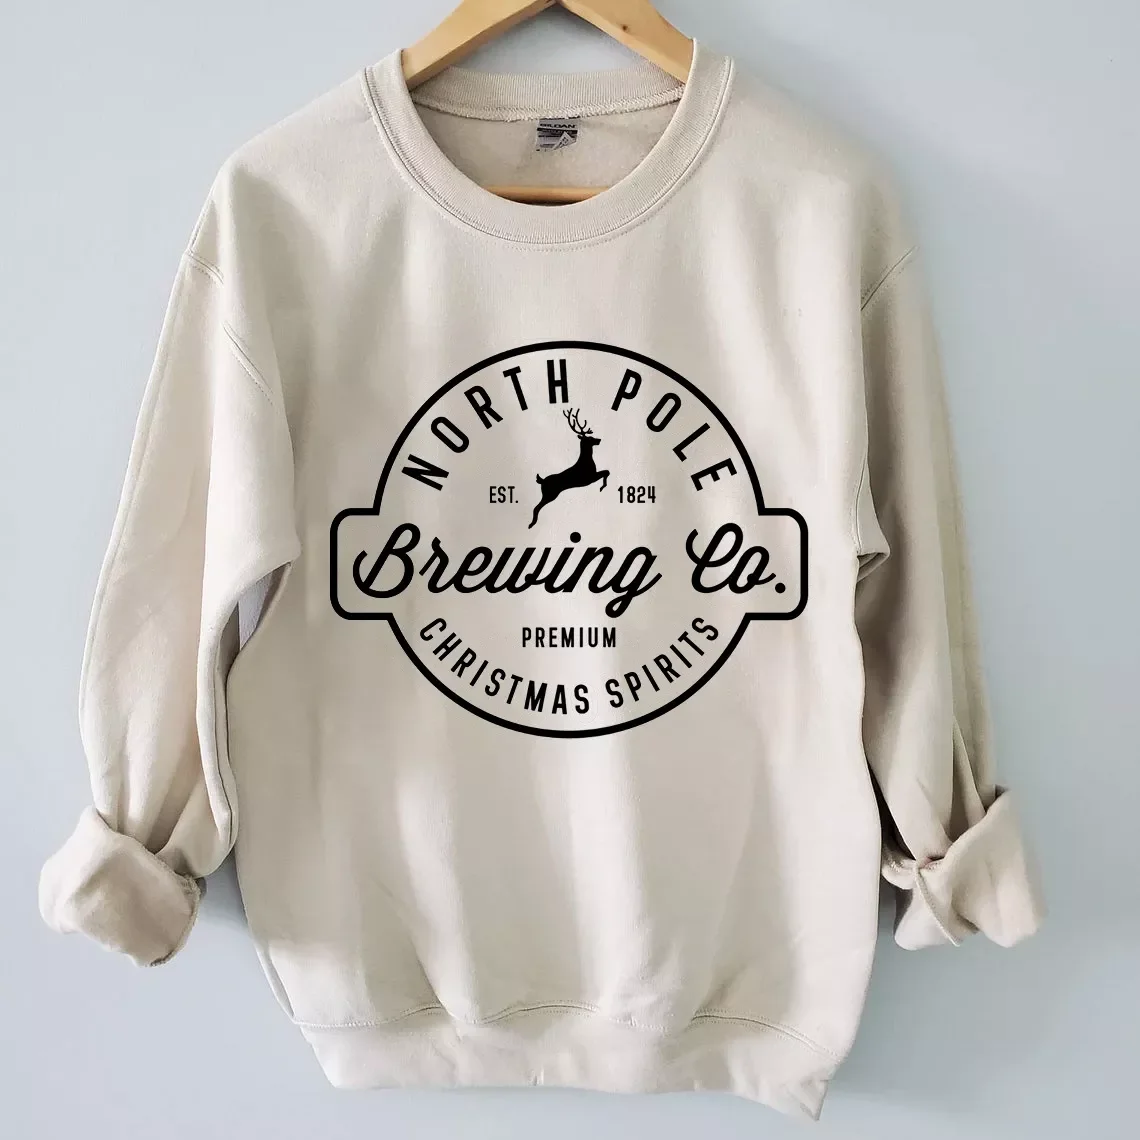 

Women's North Pole Brewing Co Sweatshirt Tops Sweatshirt Graphic Sweatshirts Winter Clothes Women Pullovers